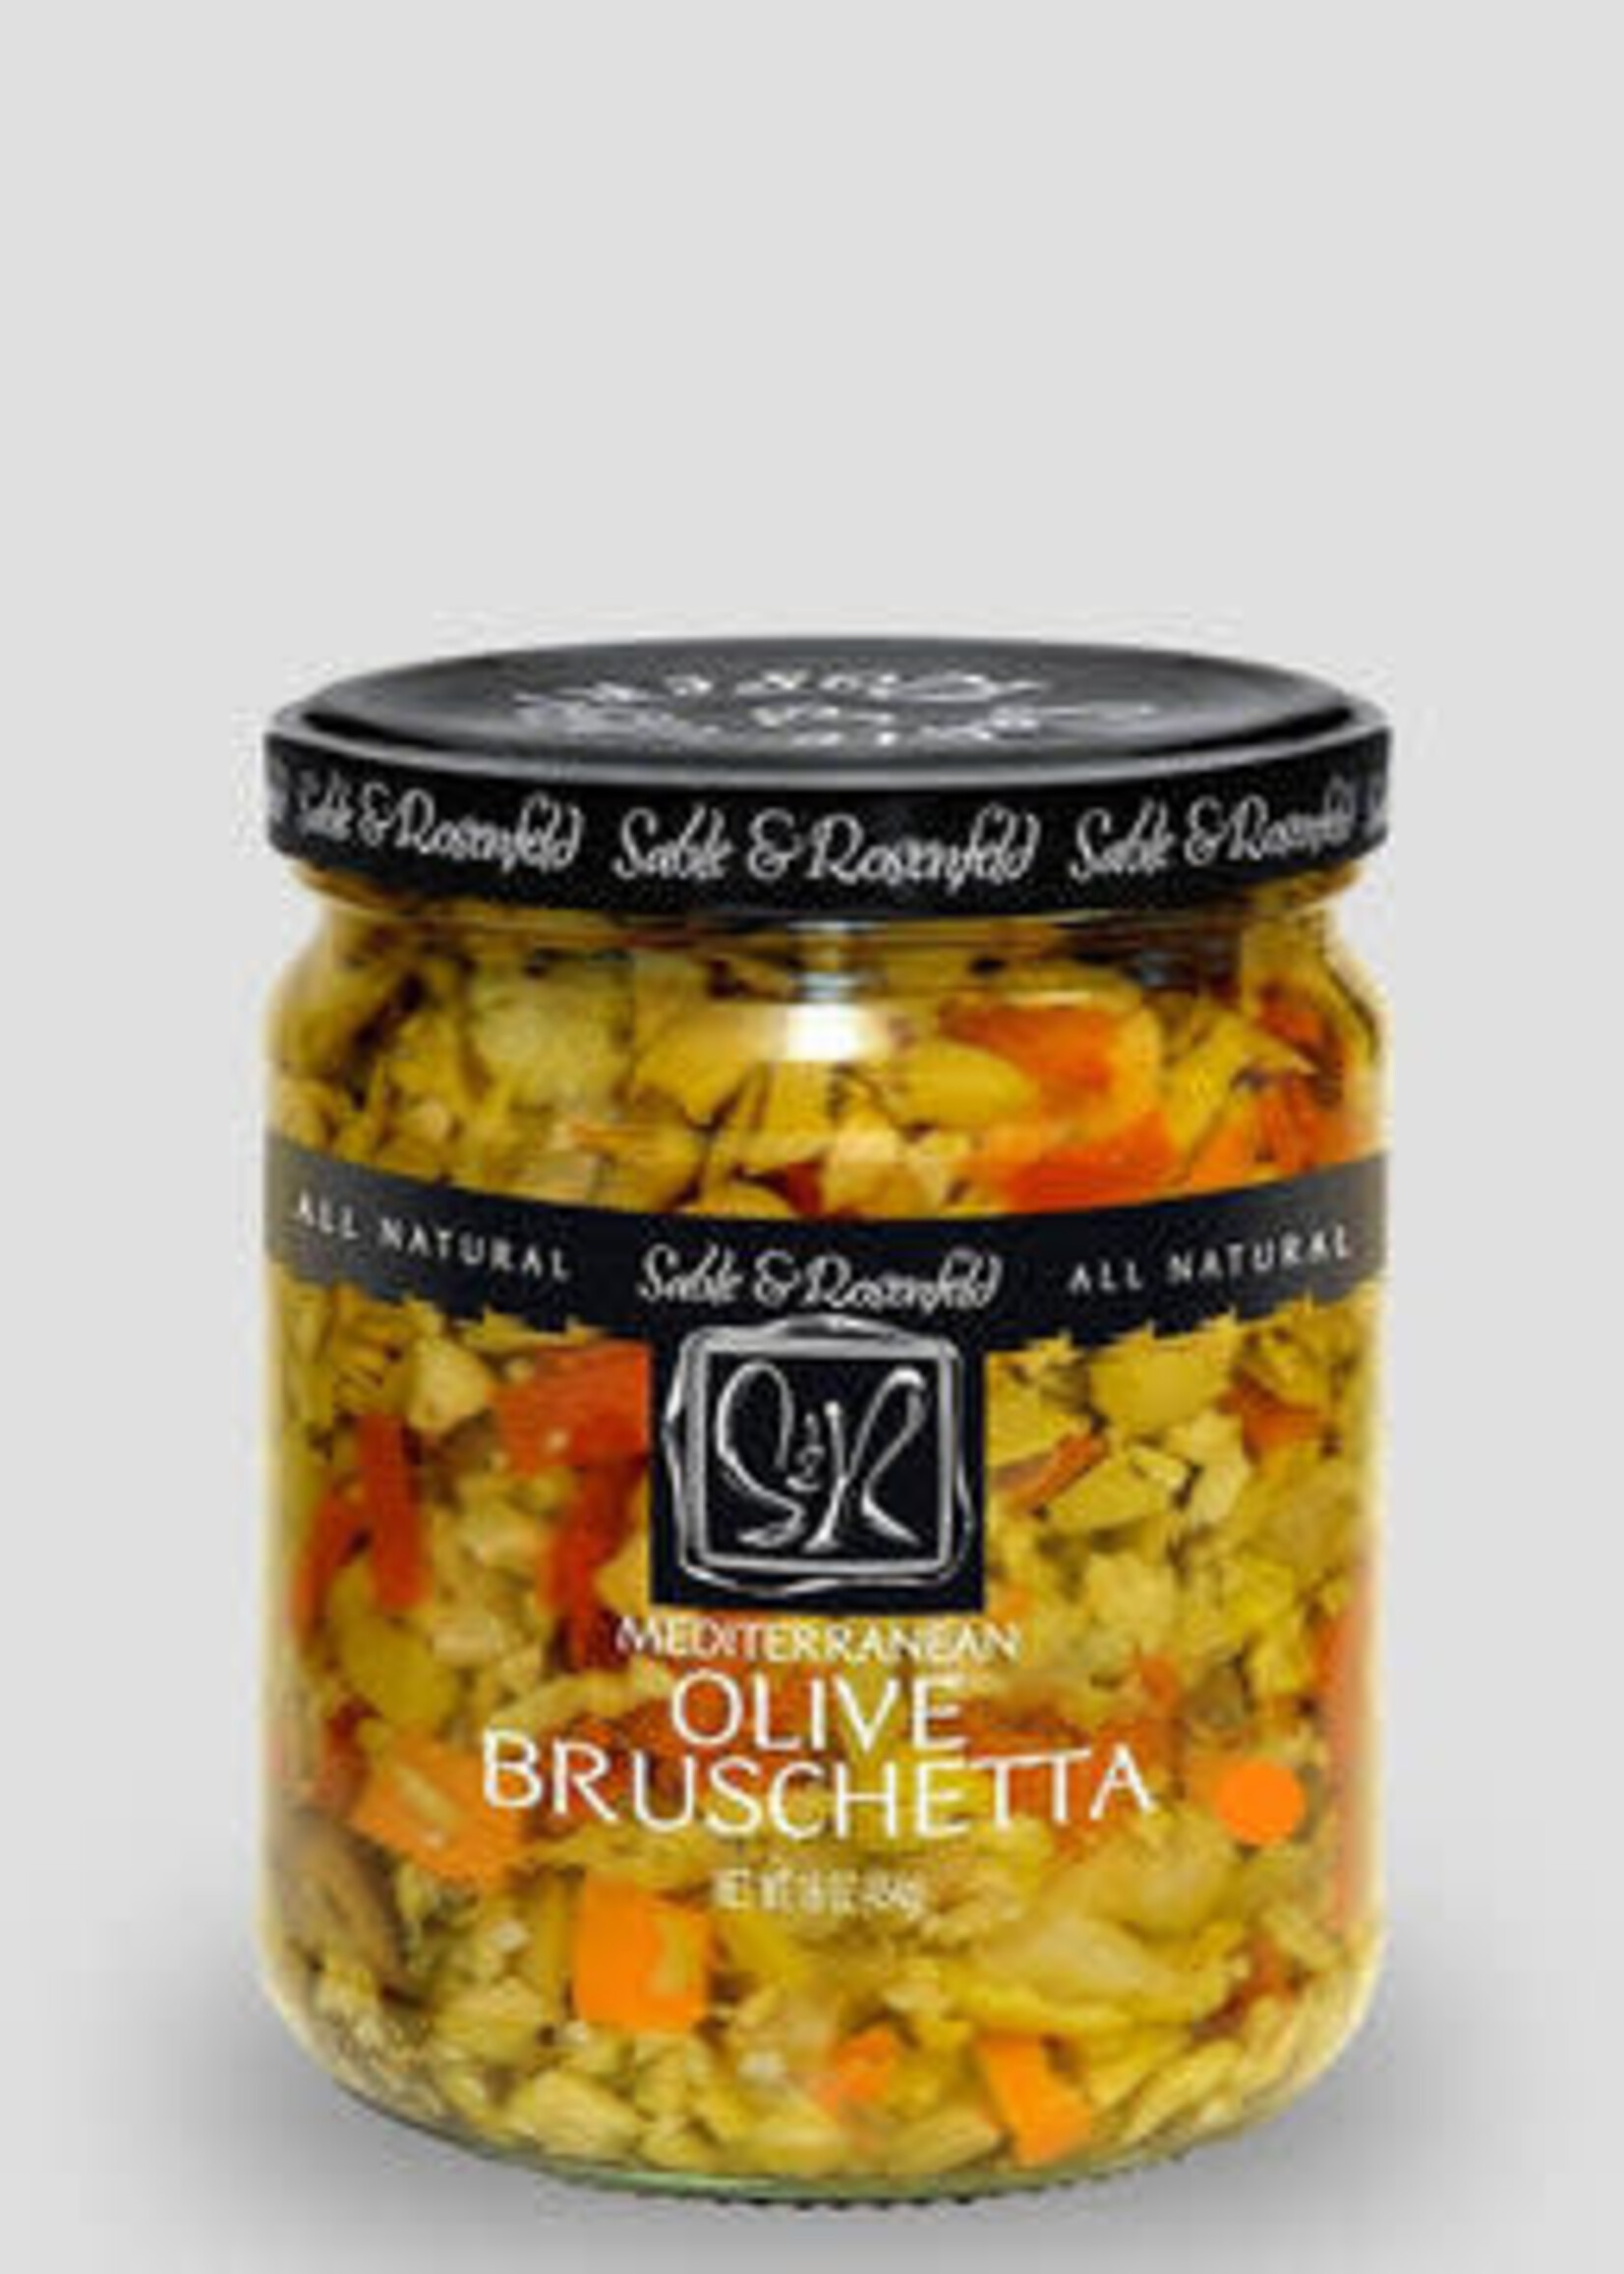 Sable & Rosenfeld Mediterranean Olive Bruschetta